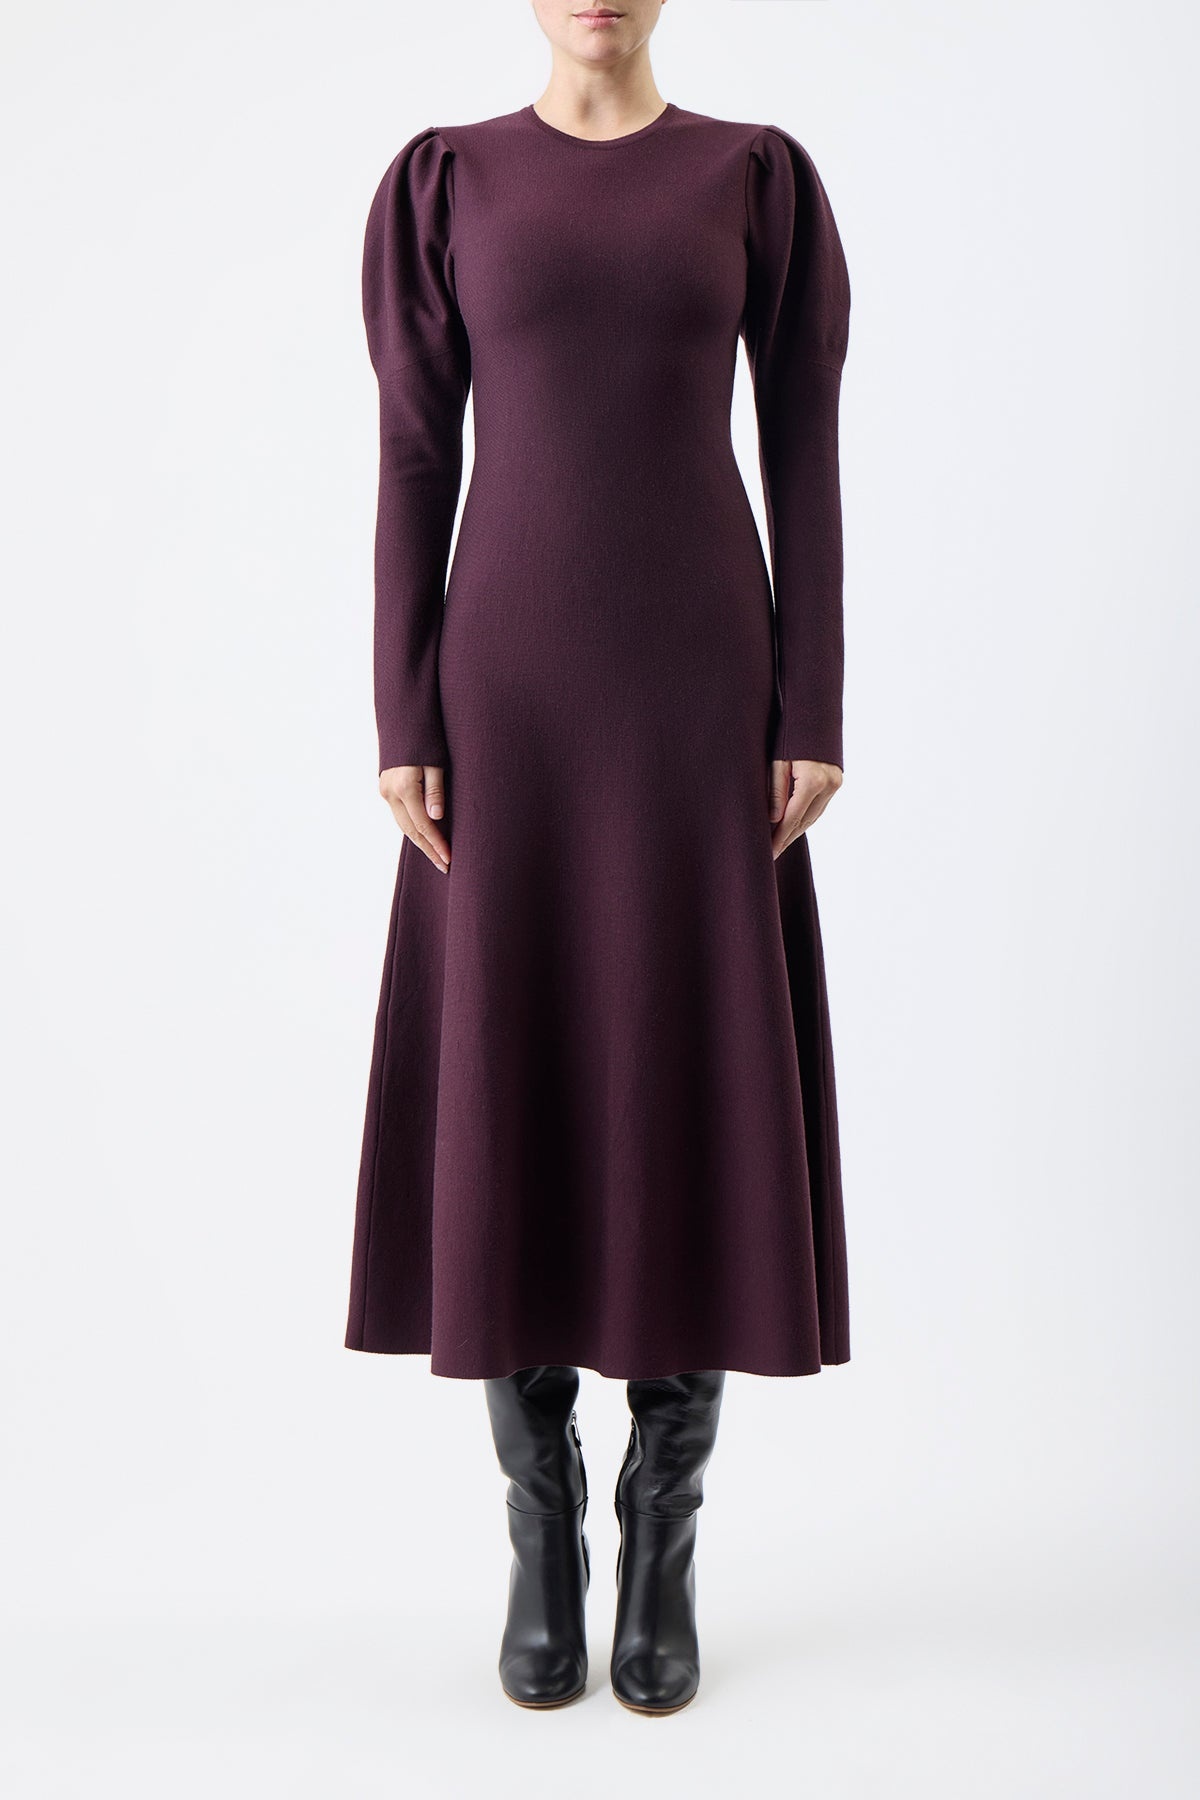 Hannah Dress in Deep Bordeaux Cashmere Wool - 2